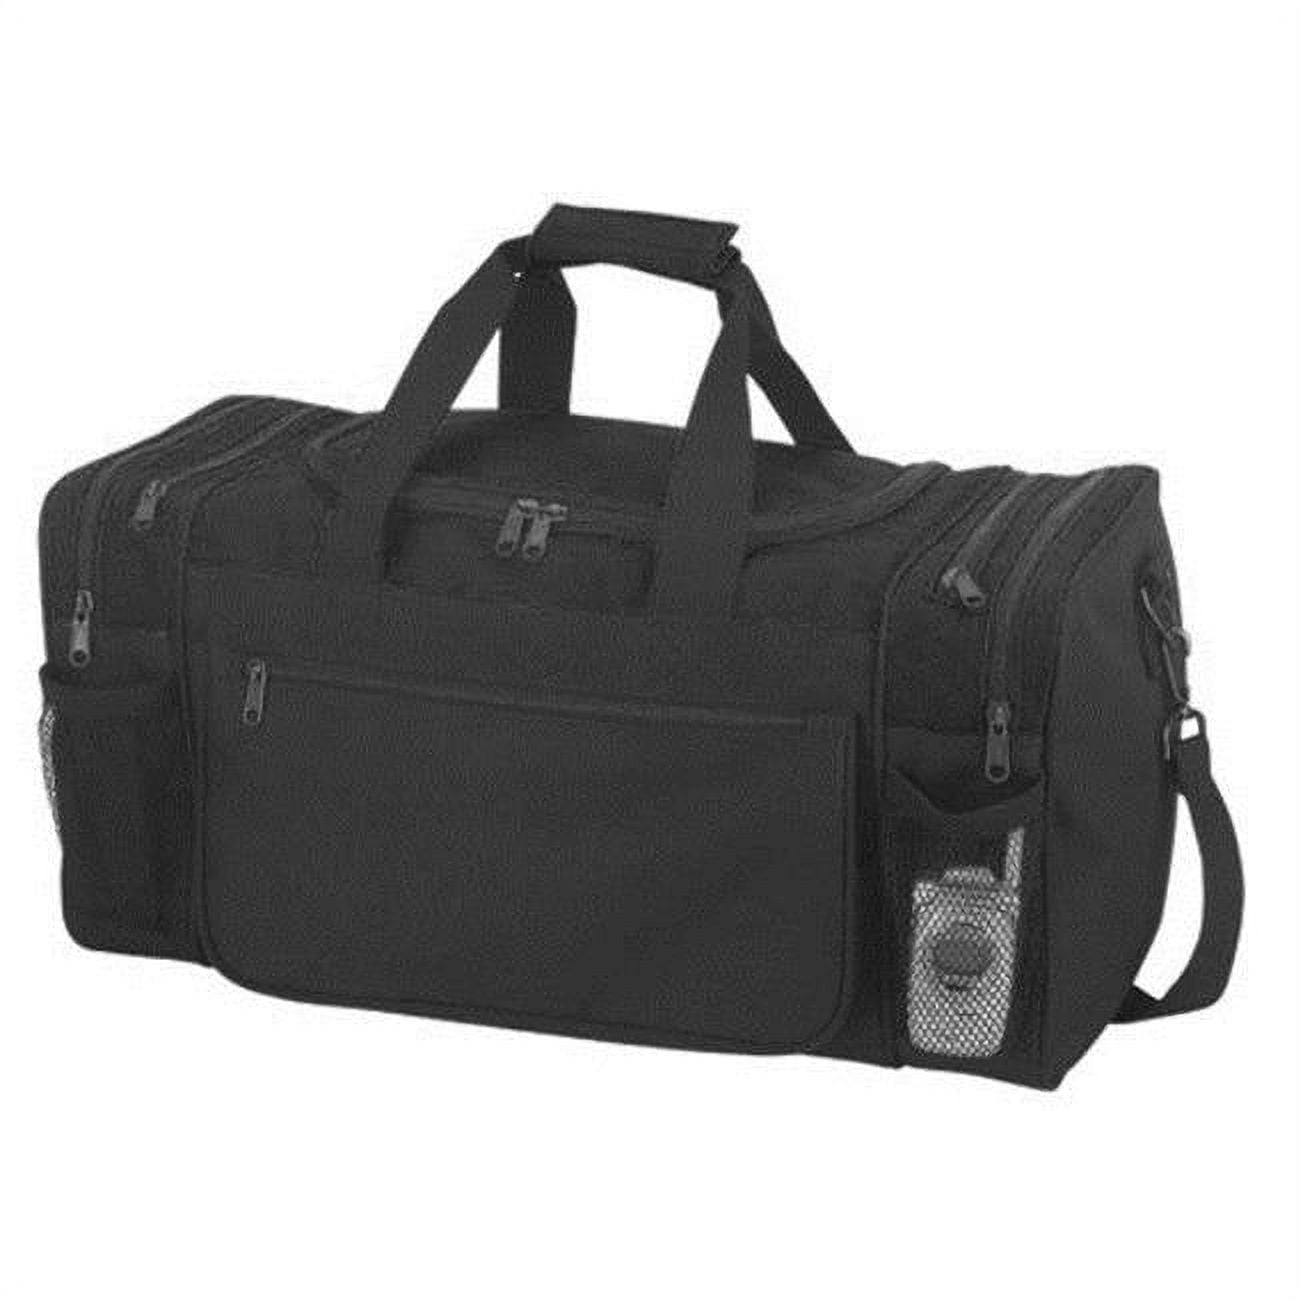 Sports Duffel Bag - Black, Case Of 18